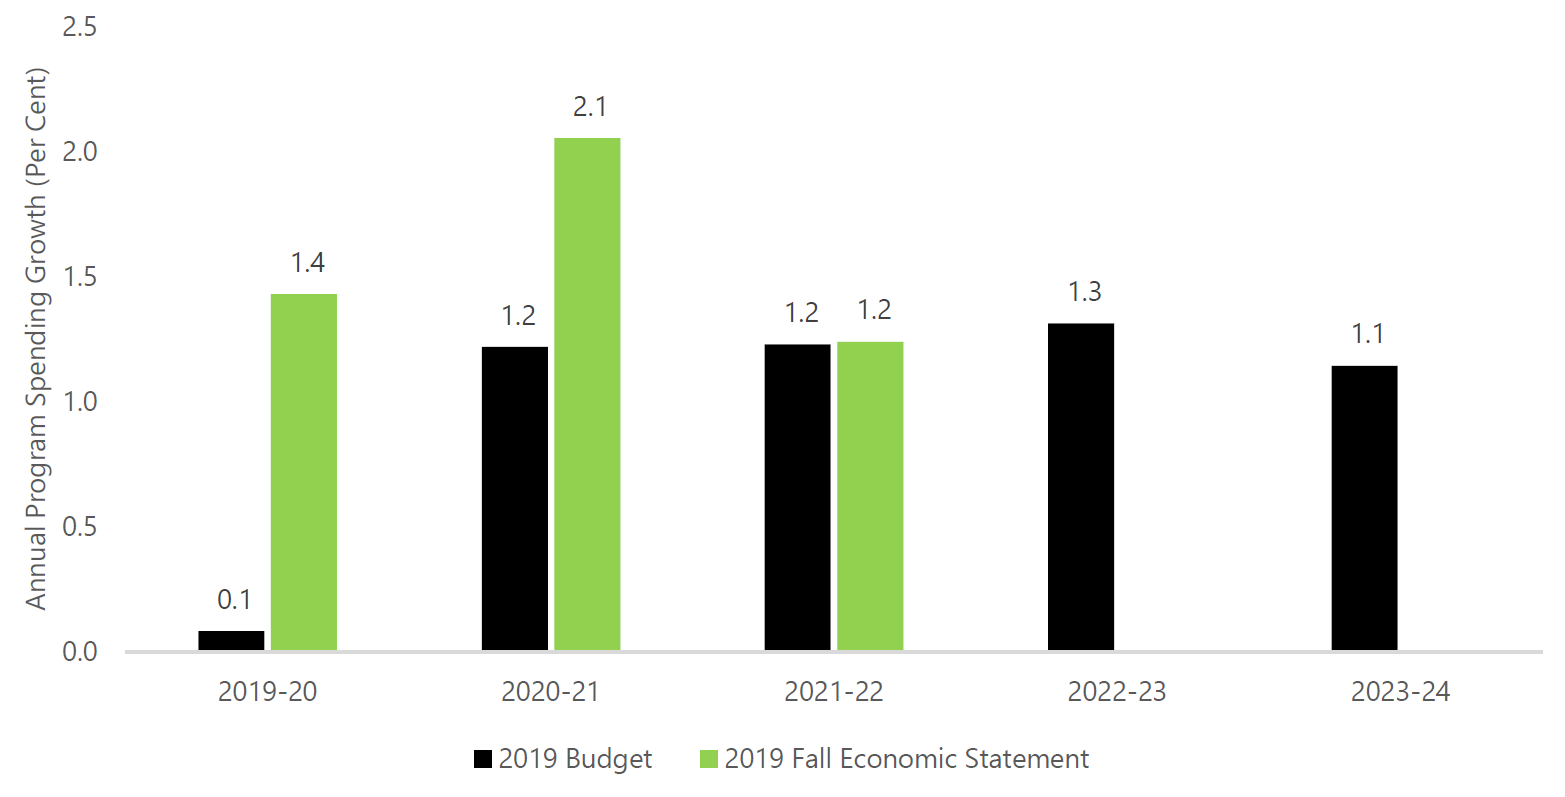 Program spending growth remains modest, despite upward revisions